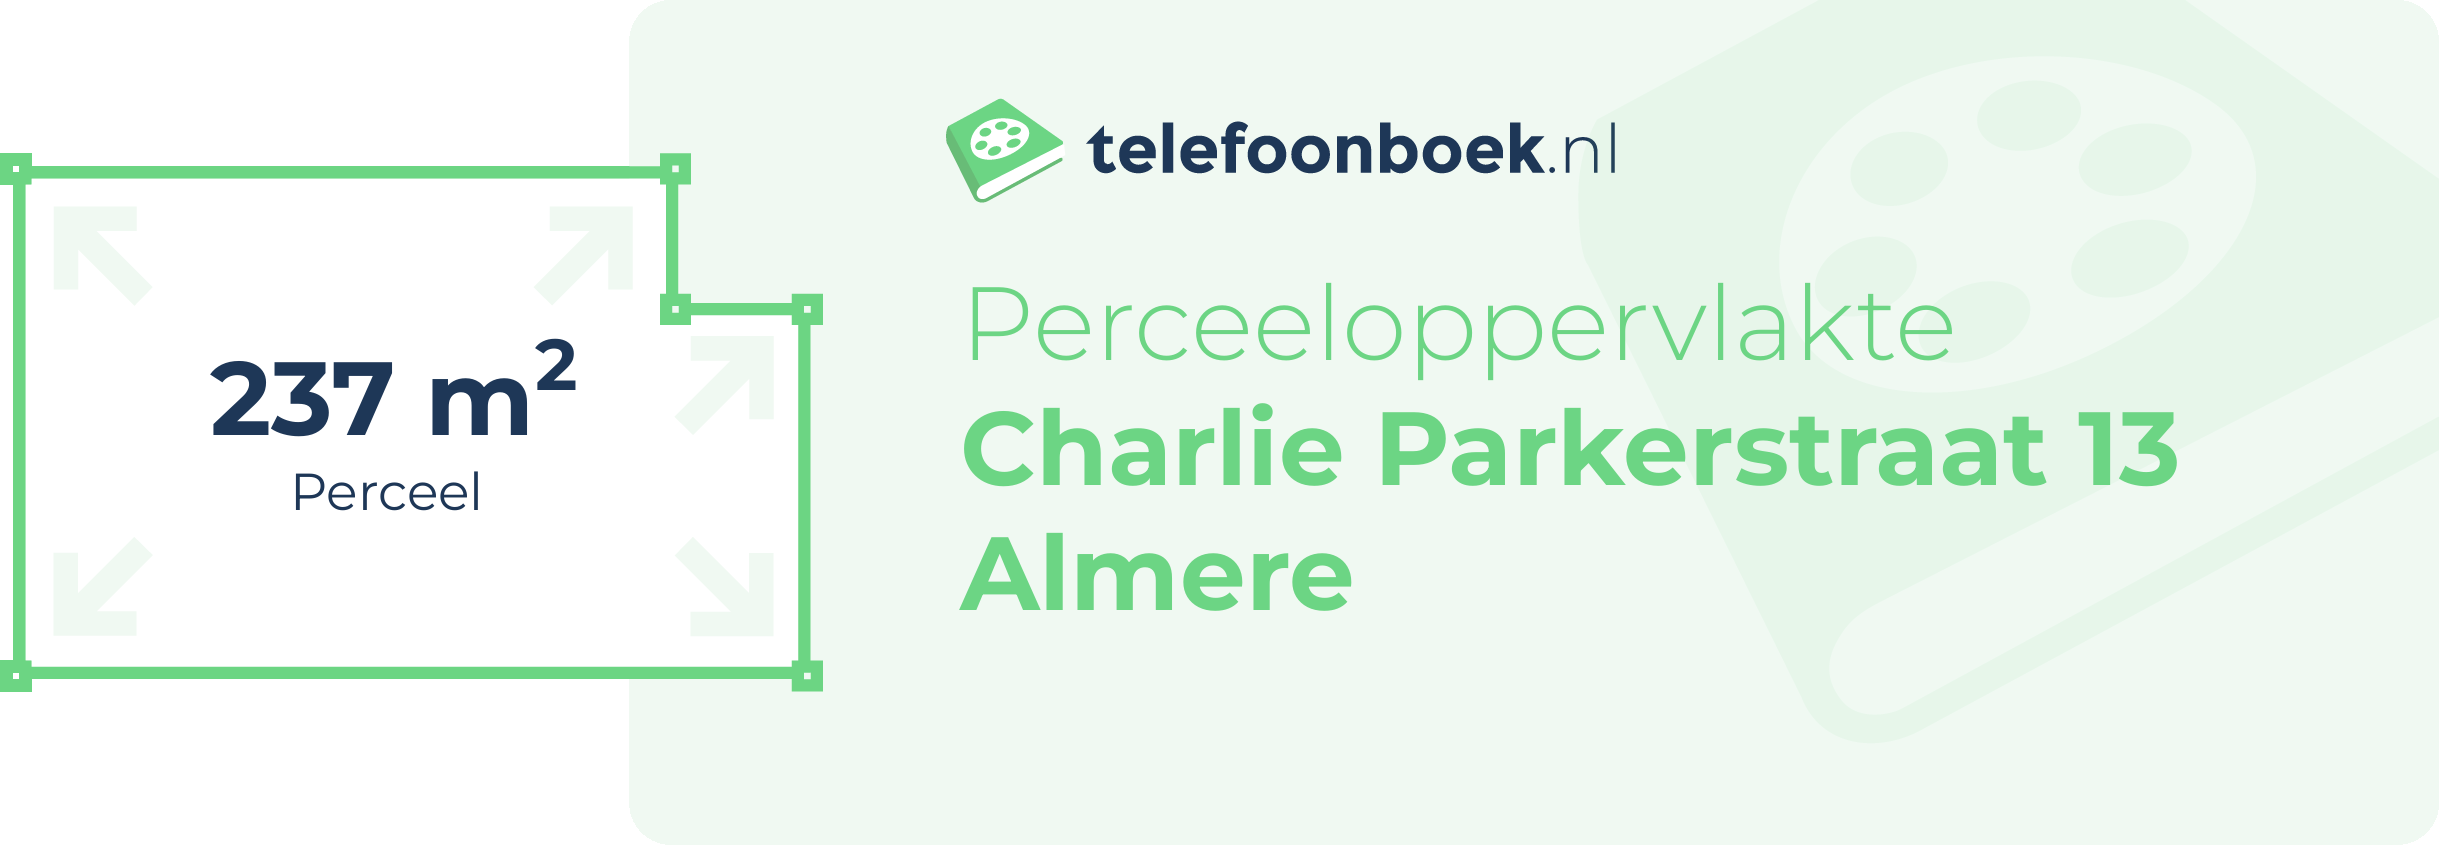 Perceeloppervlakte Charlie Parkerstraat 13 Almere